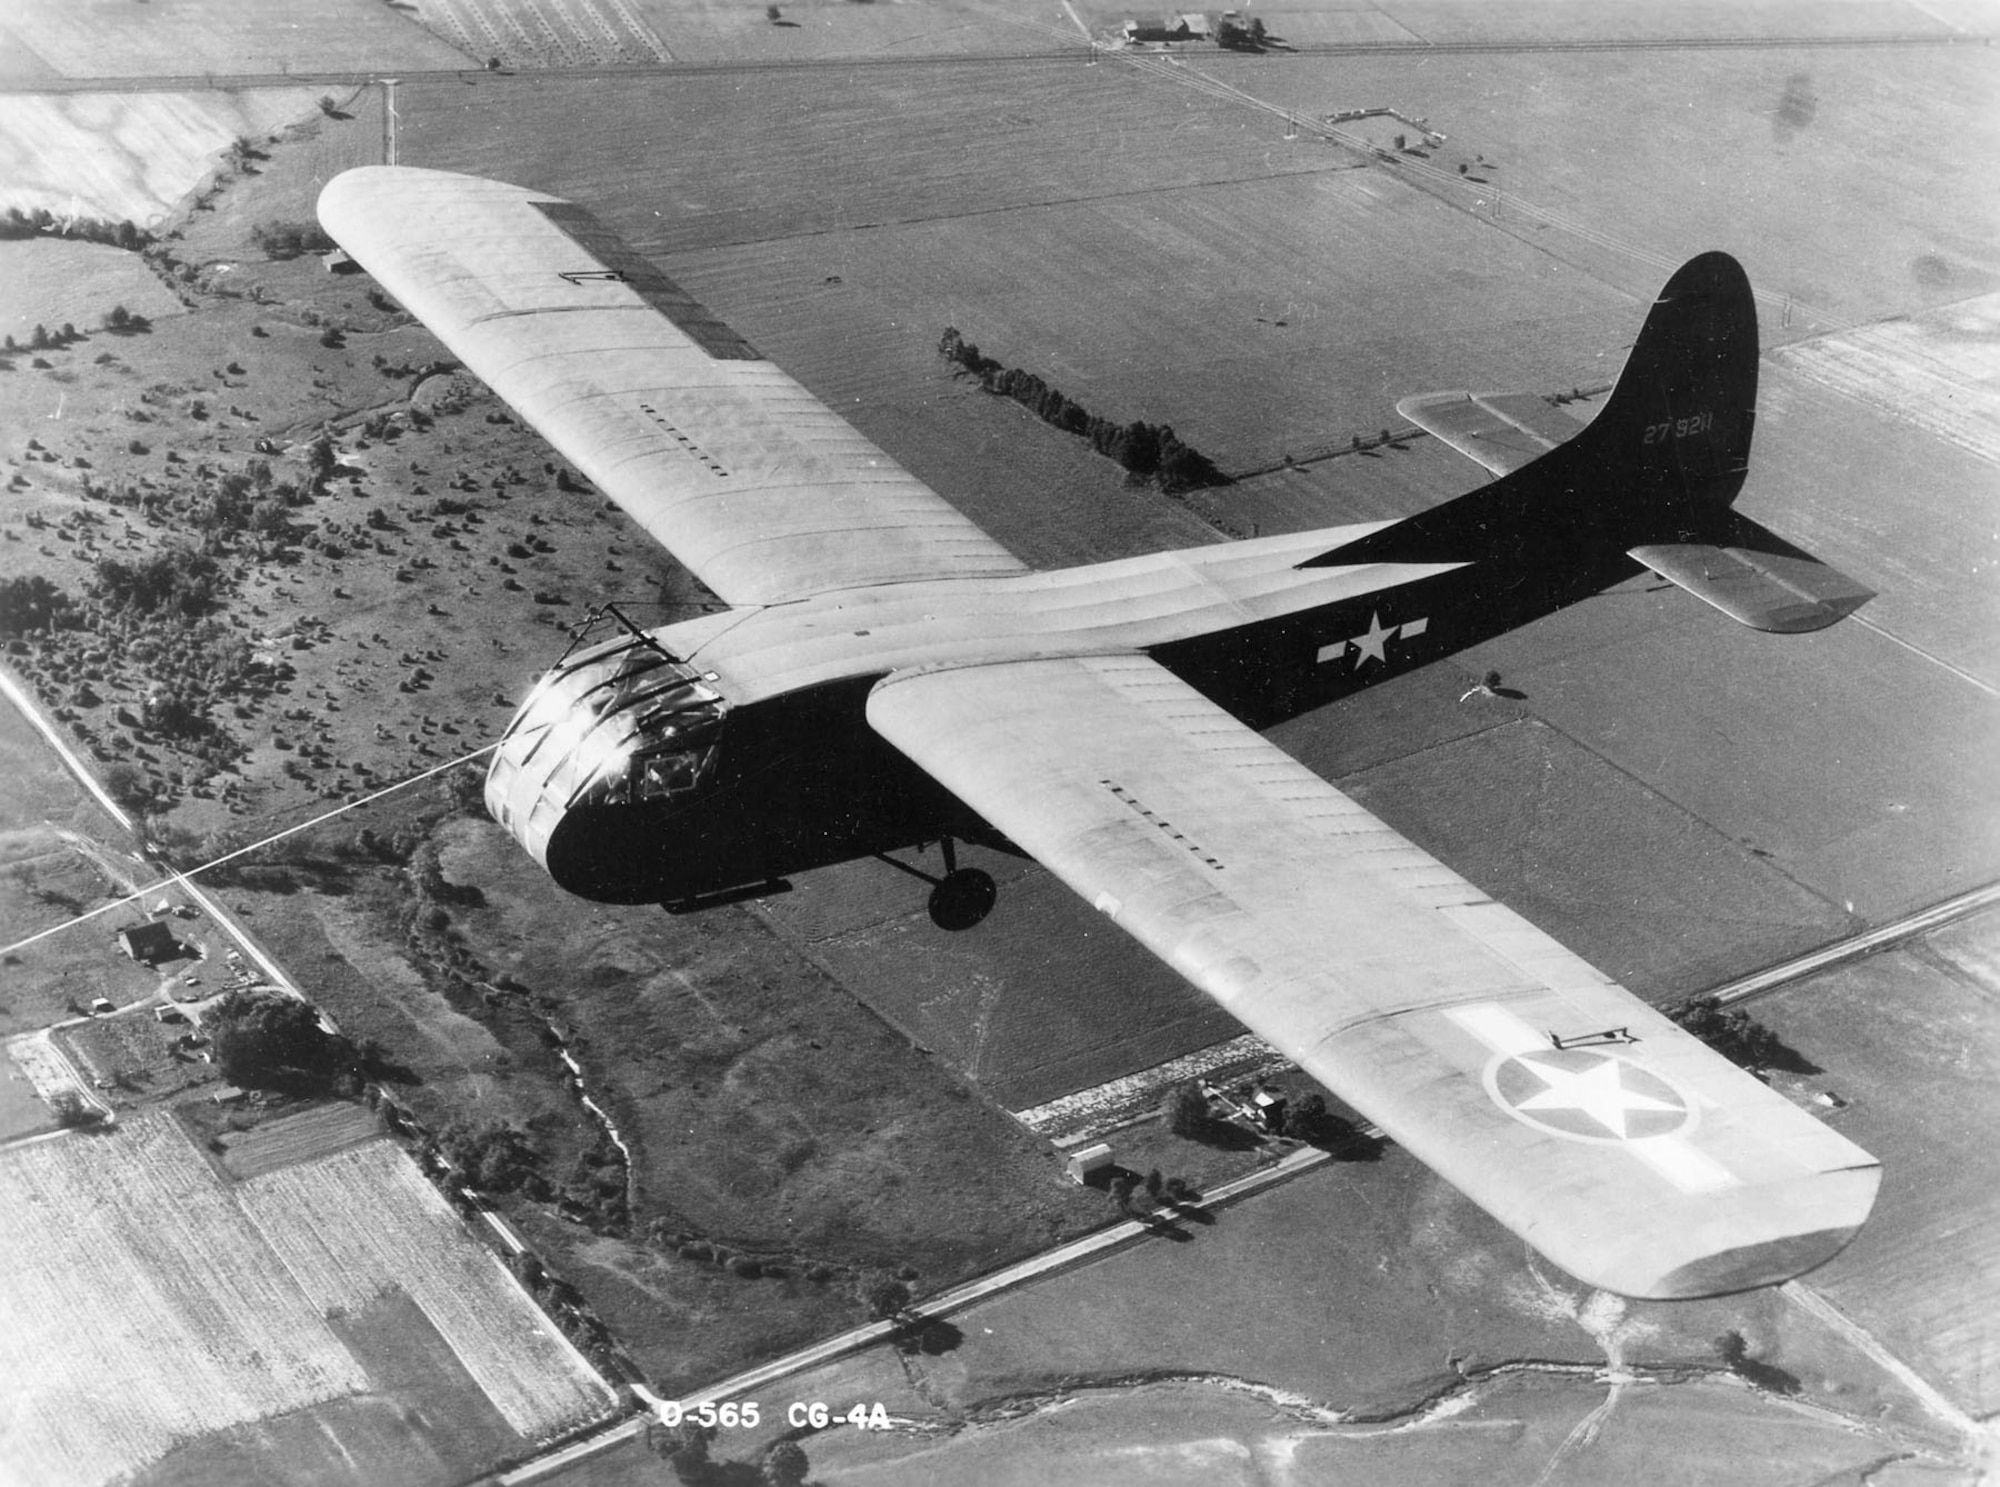 Waco CG-4A in flight (U.S. Air Force photo)